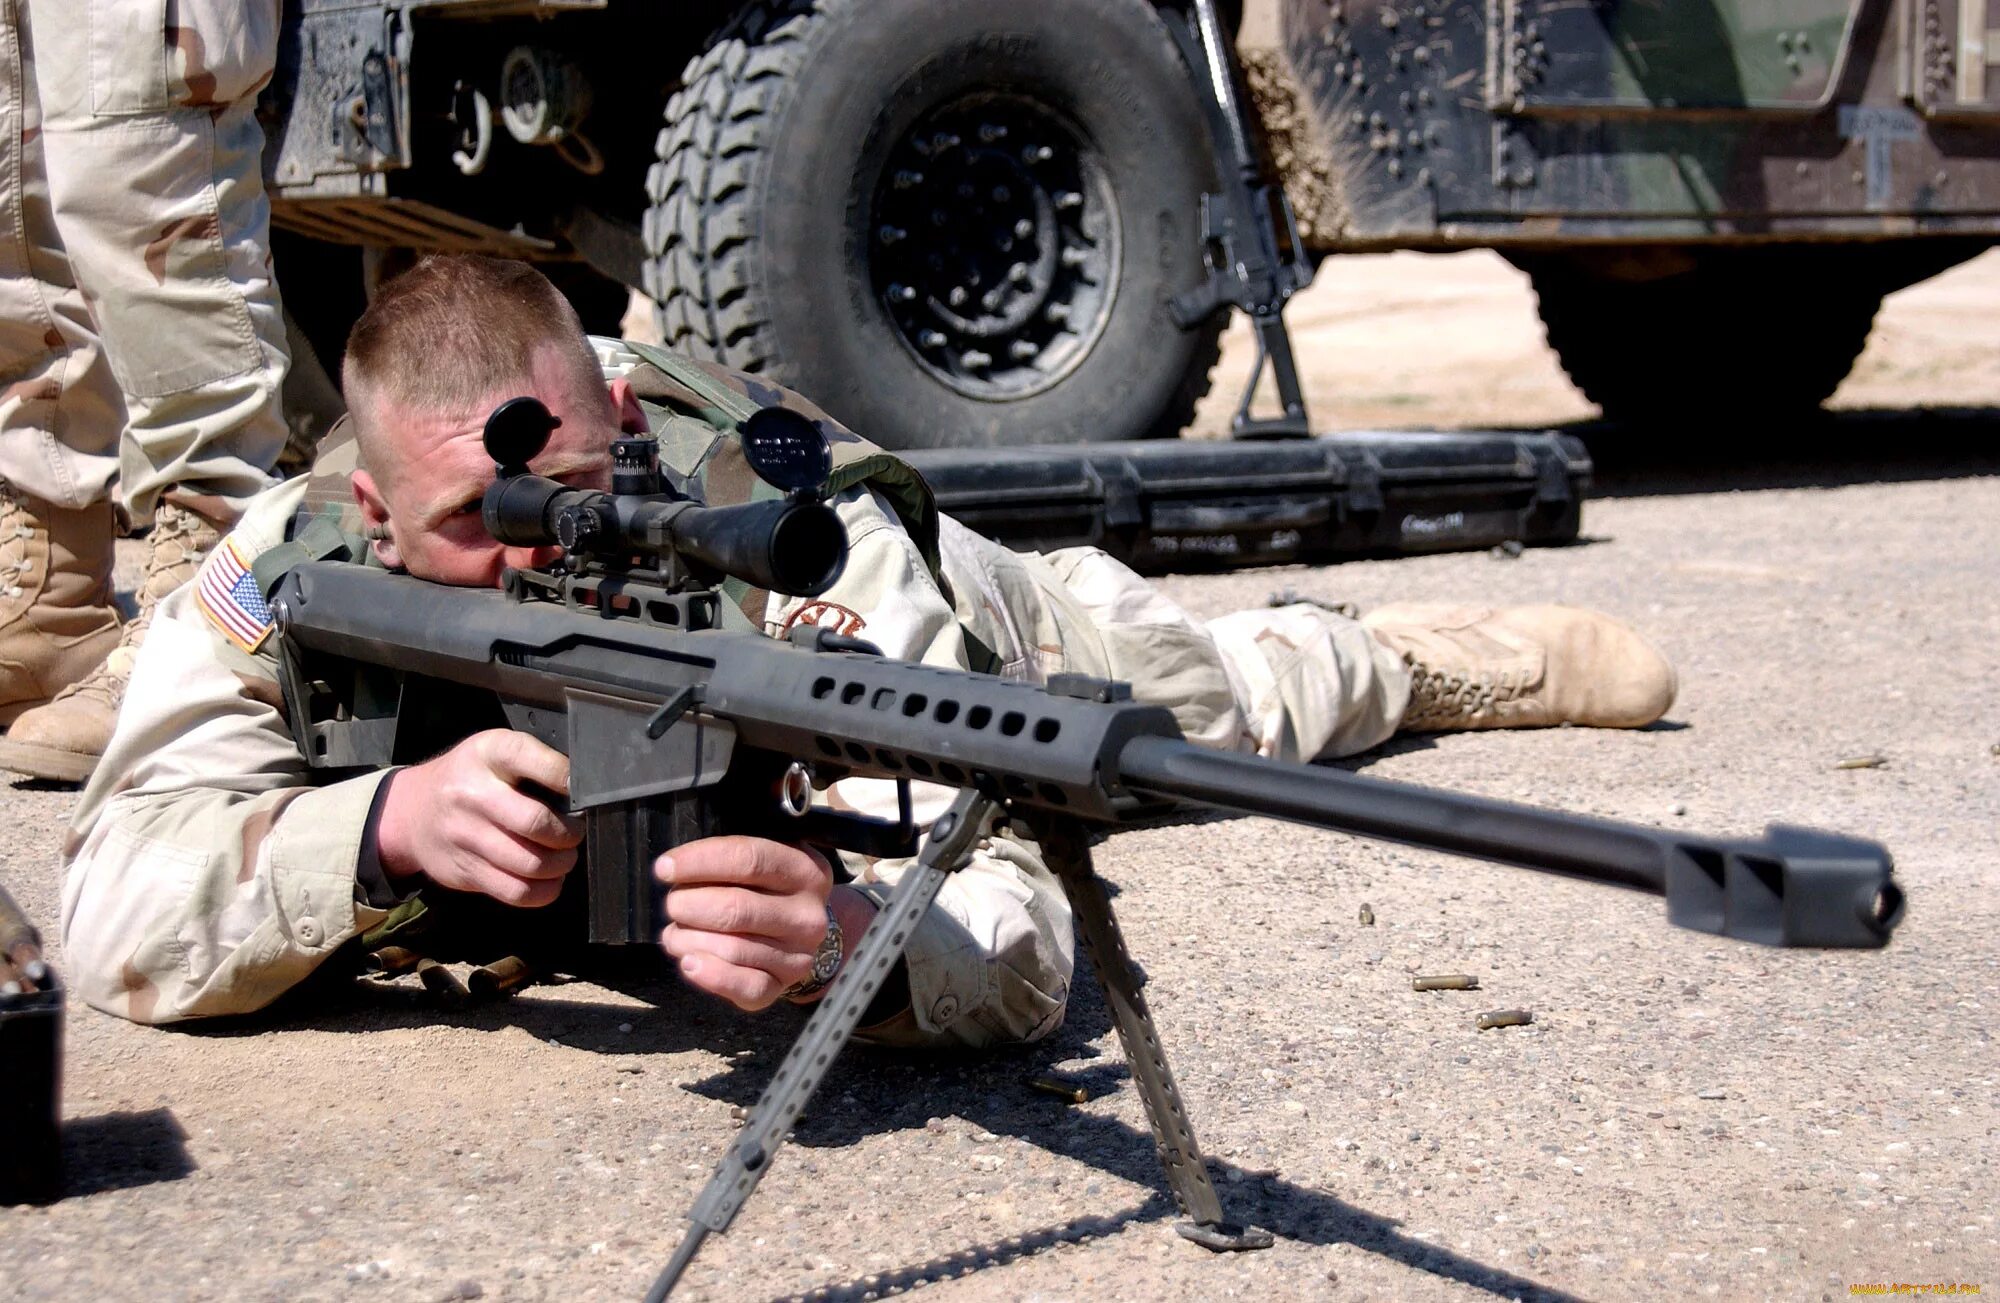 Sniper weapon. Снайперская винтовка Beretta m82. М 107 винтовка снайперская. Снайперская винтовка Barrett m82. Барретт снайперская винтовка m 82.